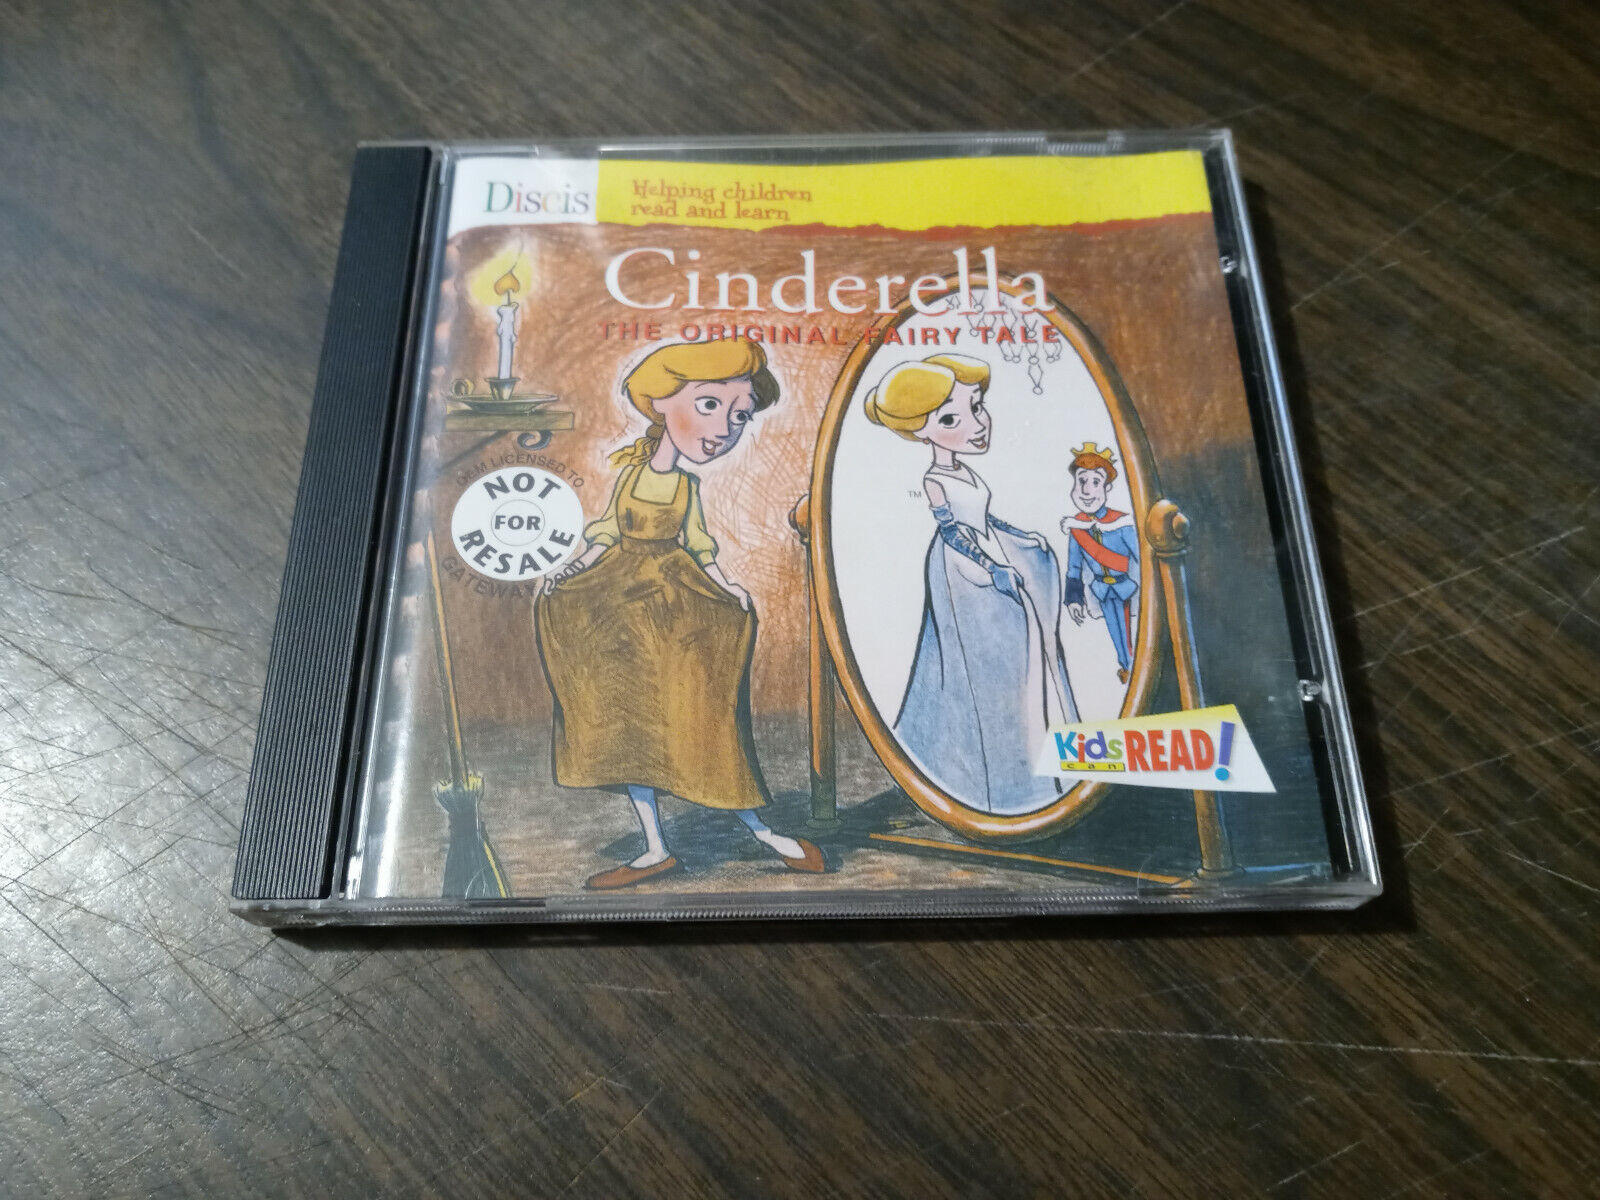 Cinderella: The Original Fairy Tale (CD-ROM, 1995, Discis) - Kids Can Read